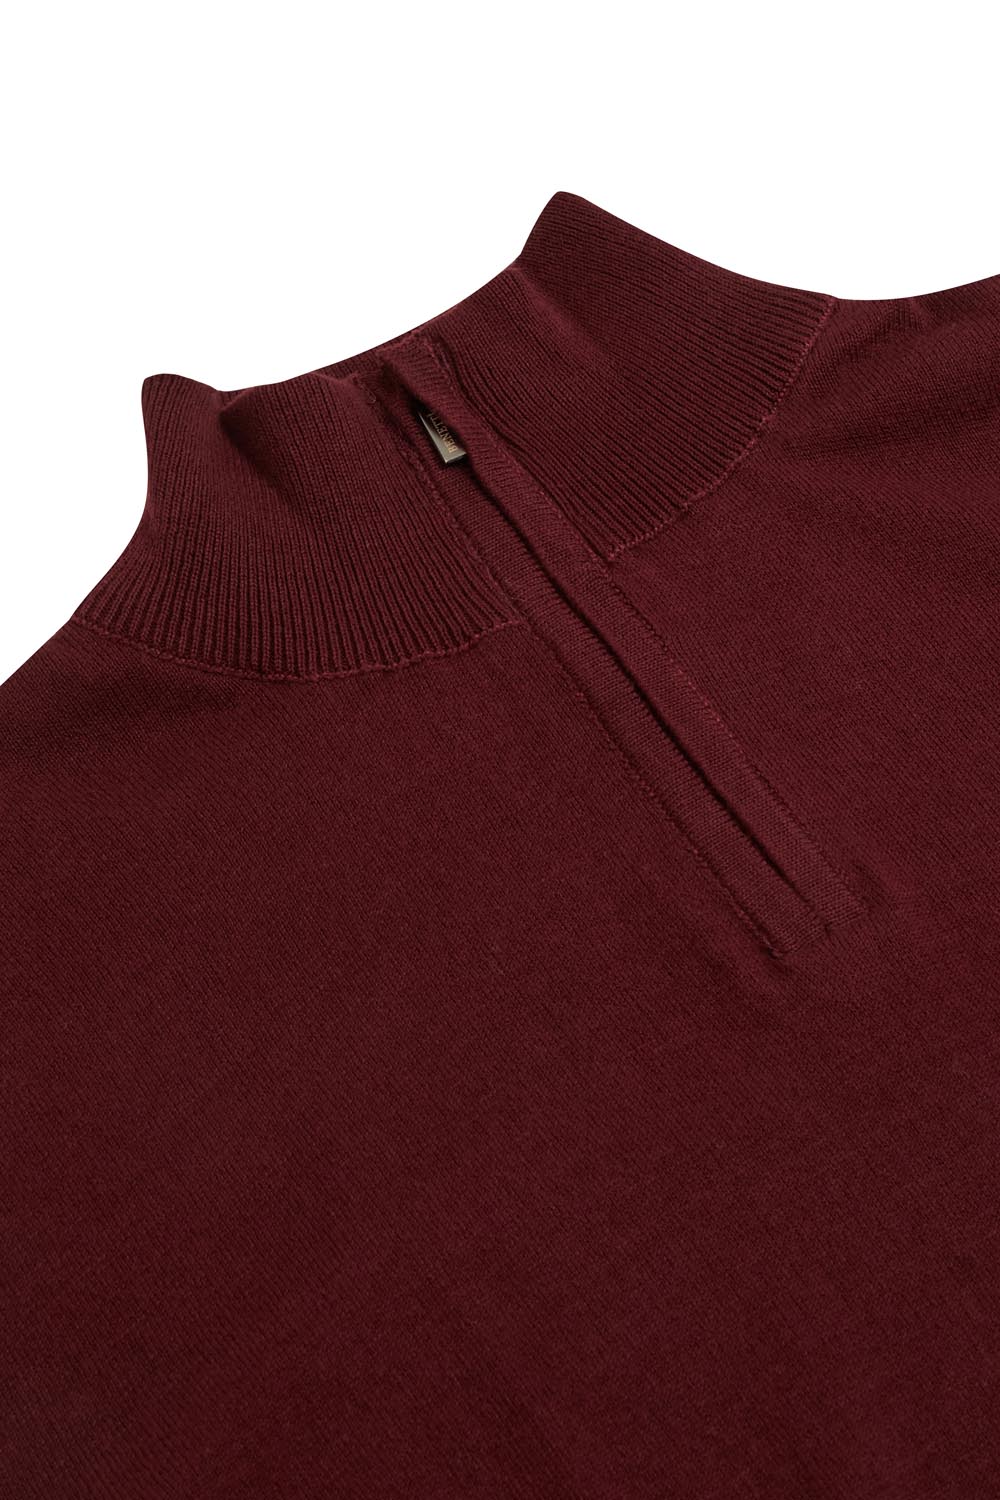 Canon Bordo Half-zip Sweater - Tom Murphy's Formal and Menswear